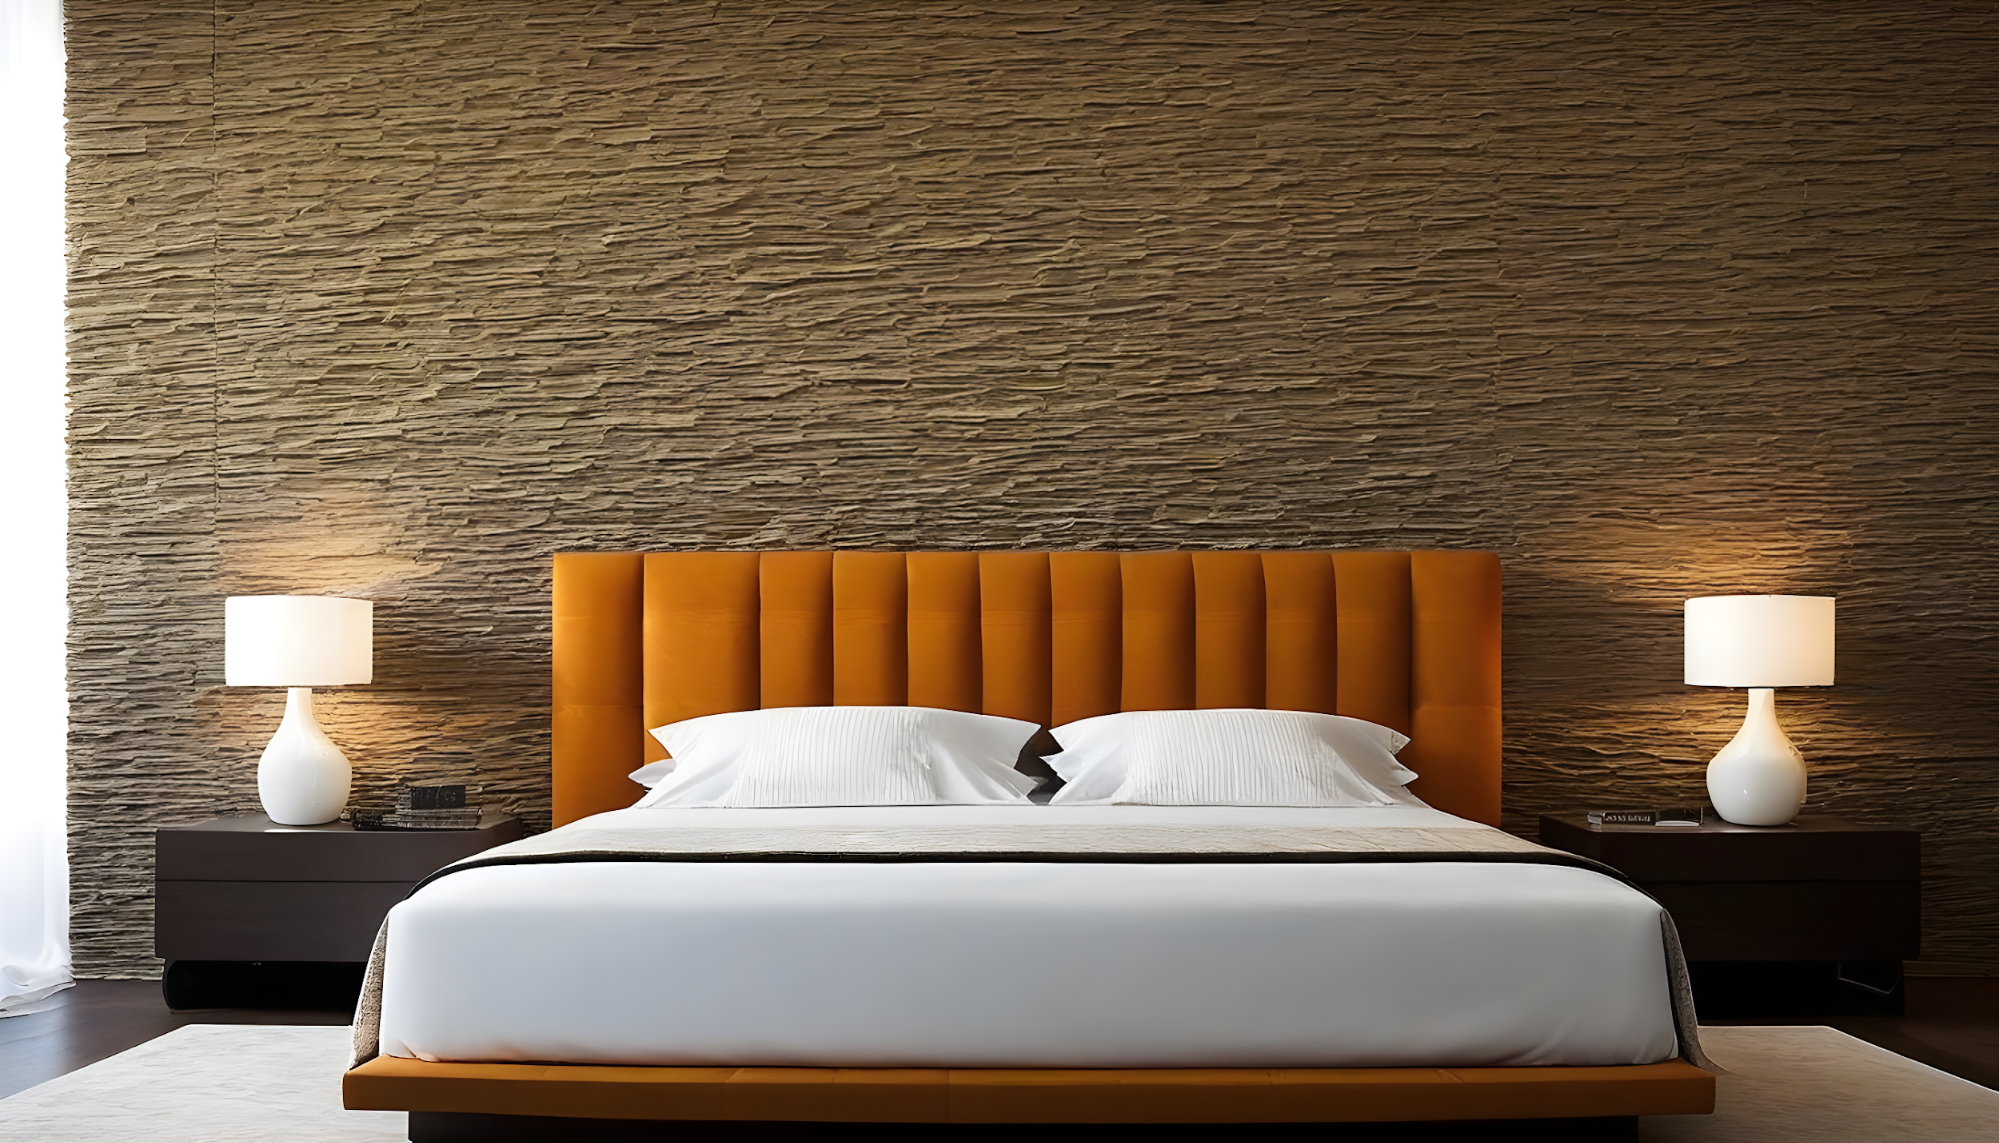 Pebbles texture designs bedroom wall